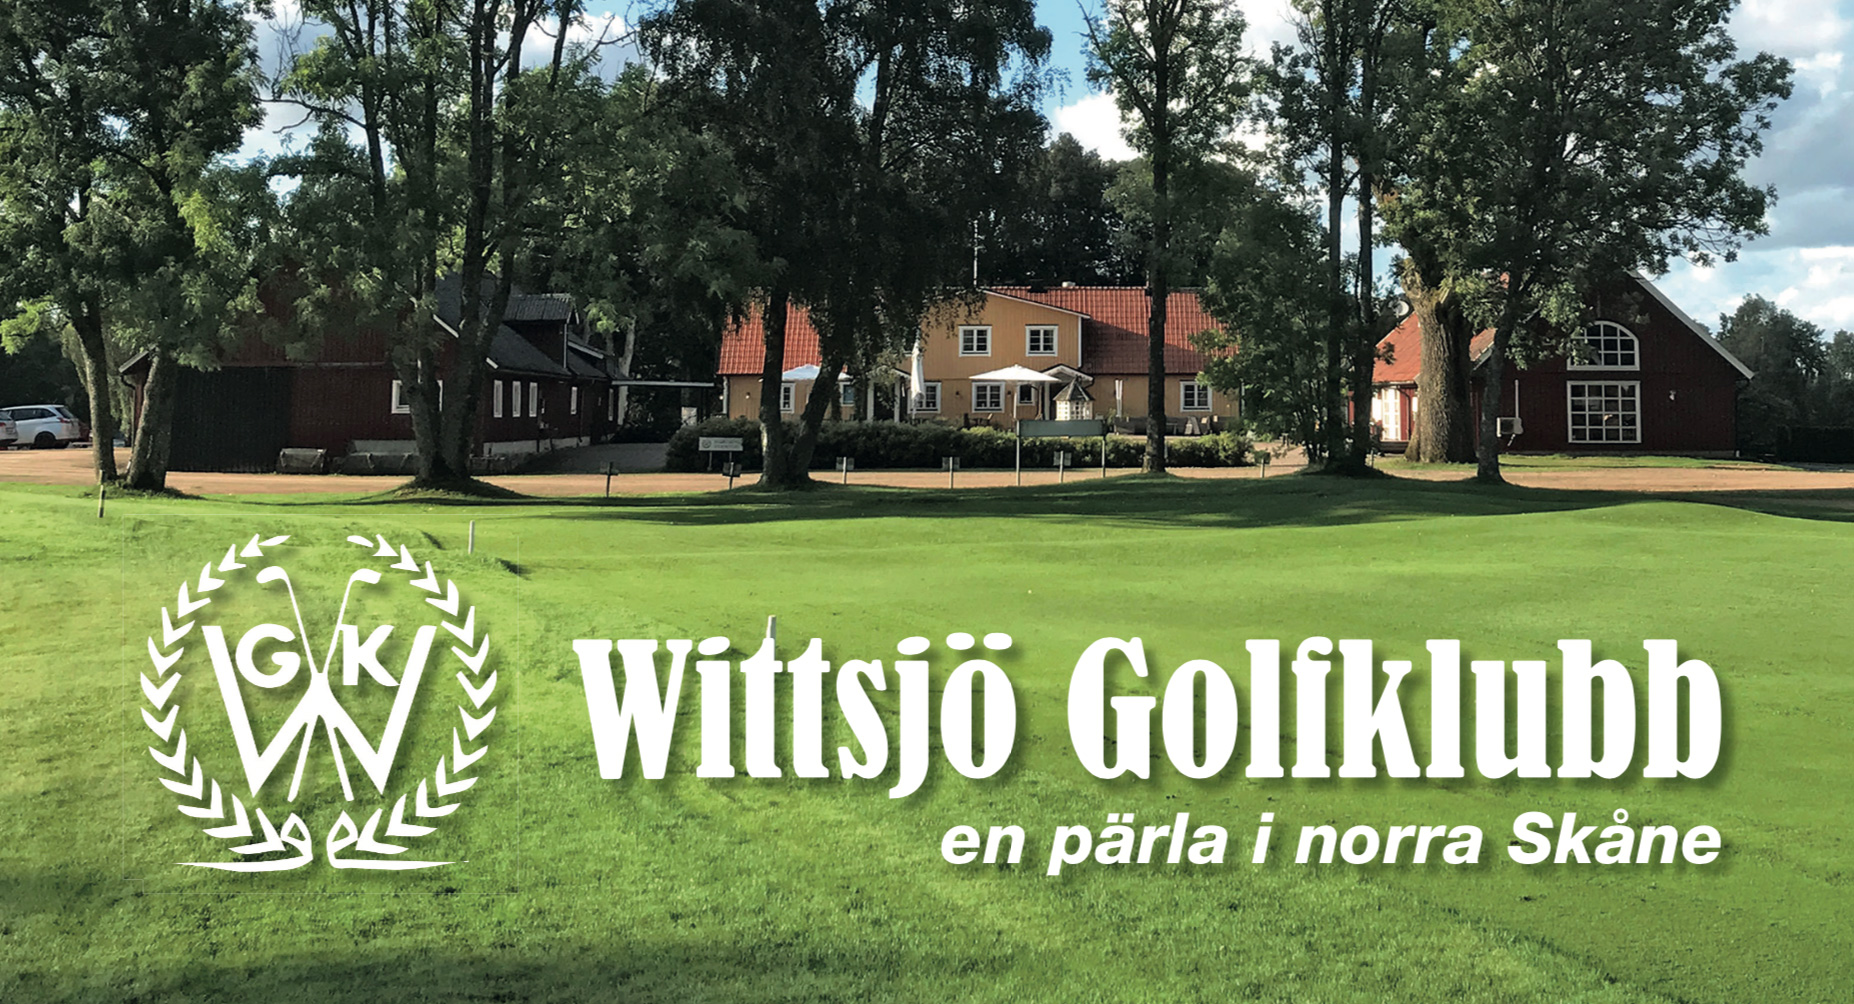 hele Sui prop Wittsjö Golfklubb | Golfophold Skåne | NordicGolfers.com